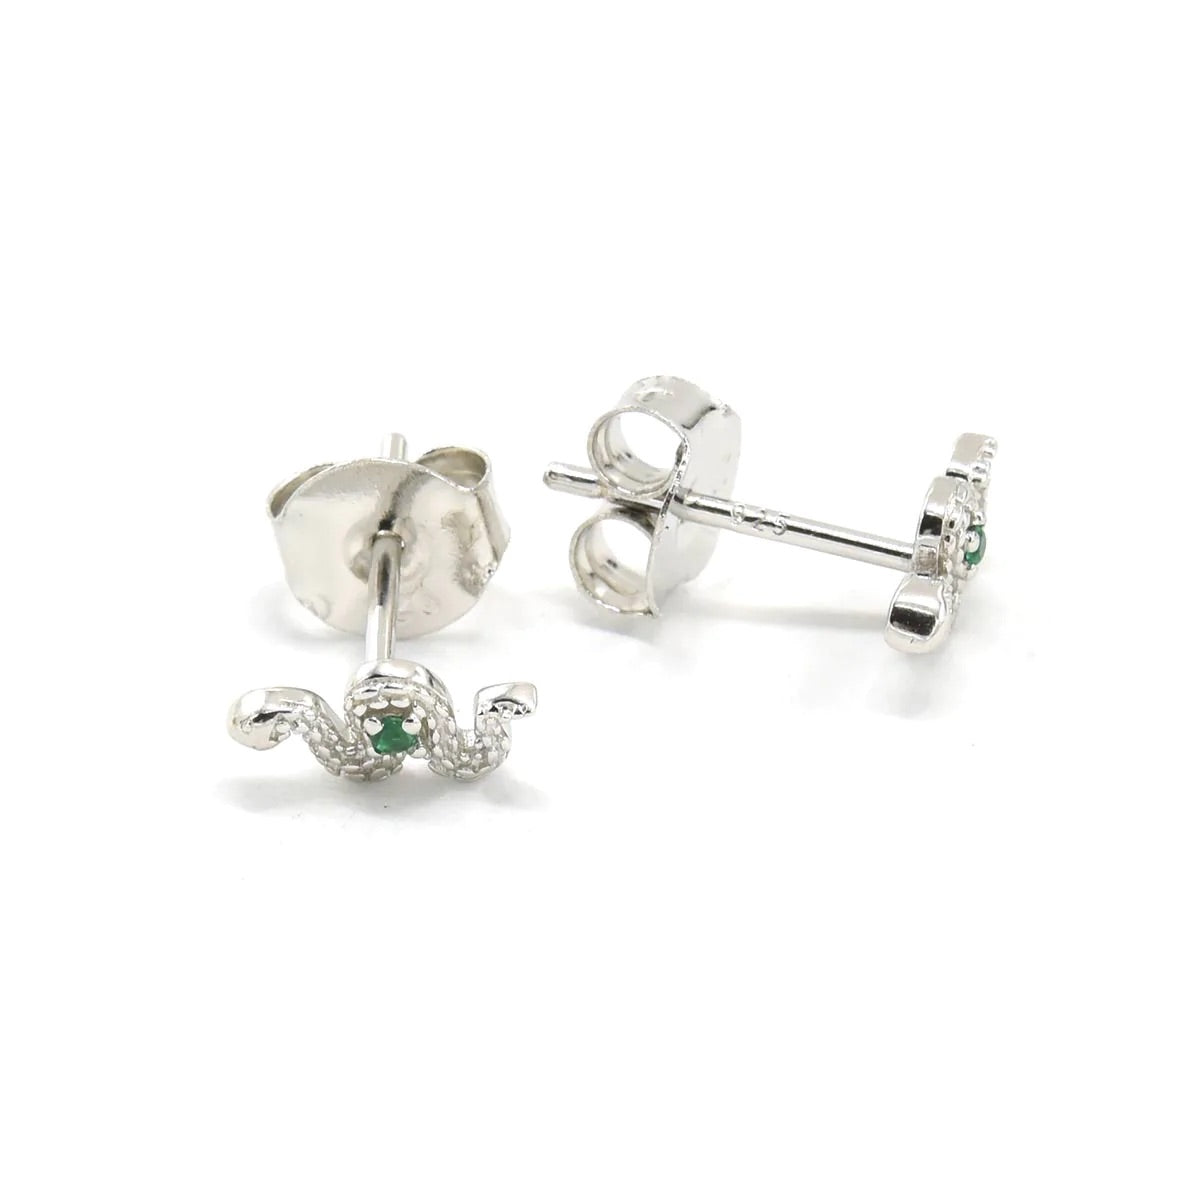 Tiny Snake Studs Earrings Emerald Green Diamond CZ, 14k Gold Plated .925 Sterling Silver Unisex Post Earrings